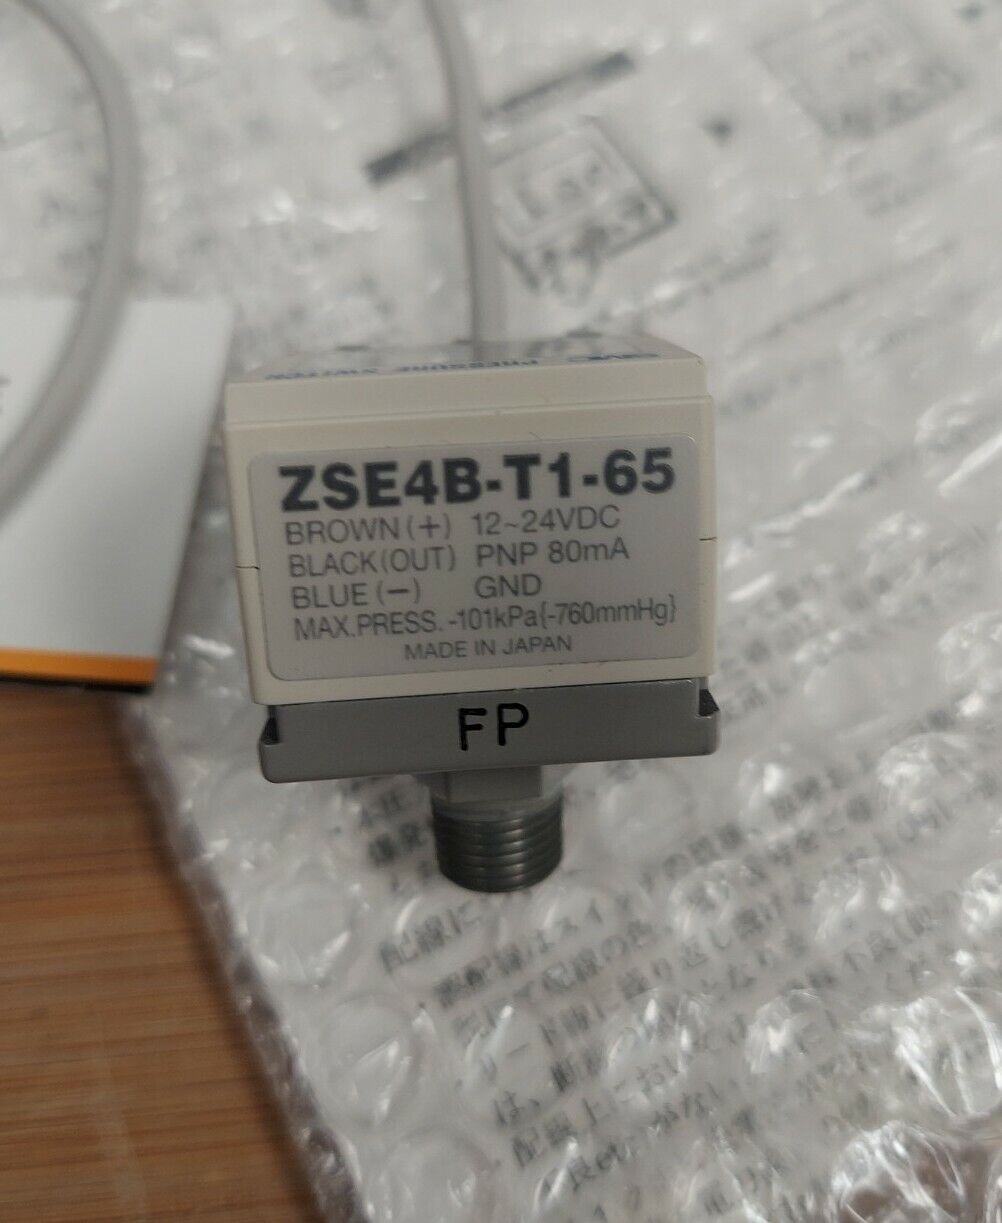 SMC - Model ZSE4B-T1-65 - Digital Pressure Switch (RE240)